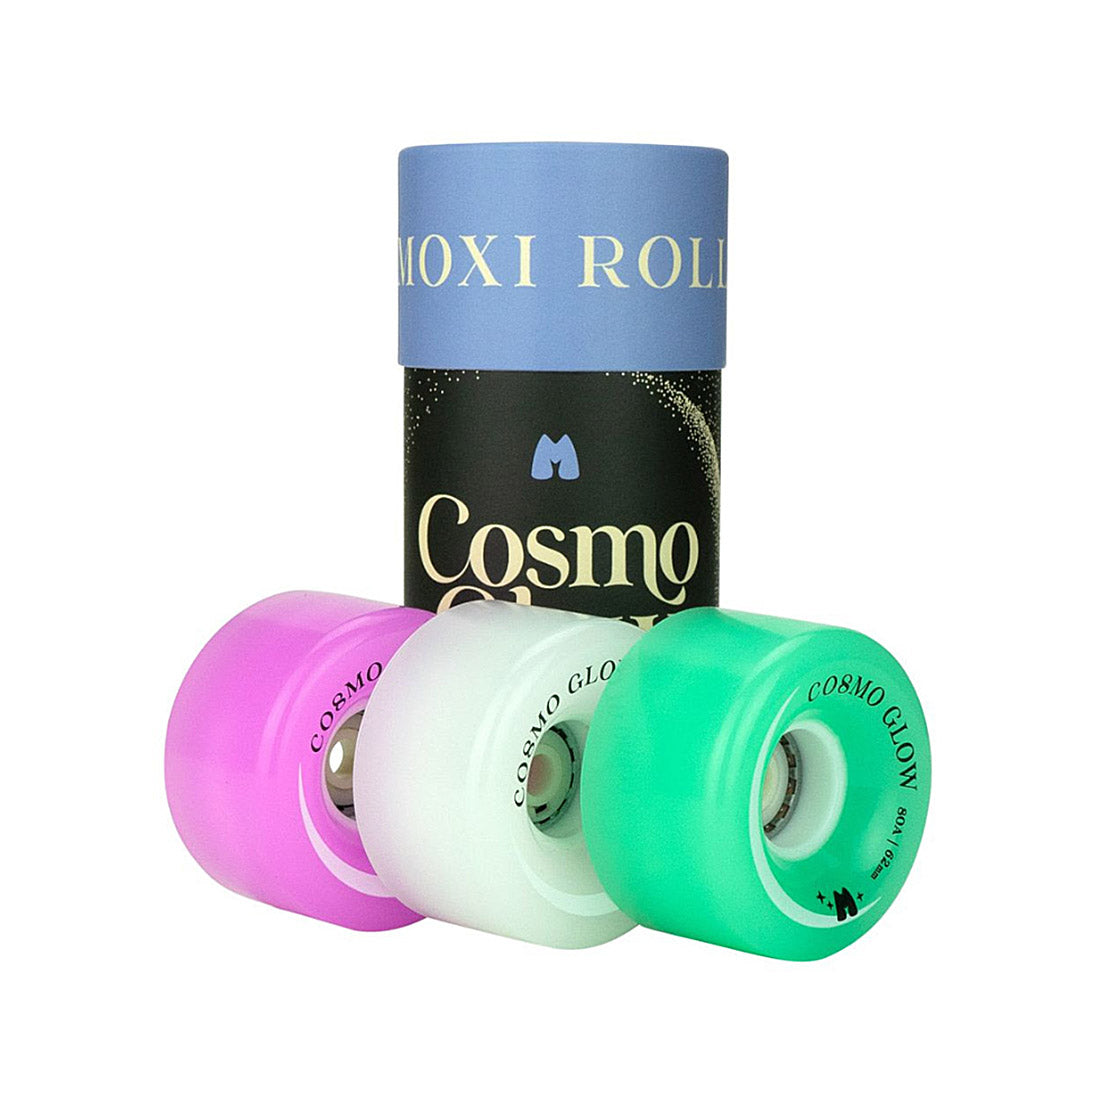 Moxi Cosmo Glow LED 62mm 80a Wheels 4pk Roller Skate Wheels